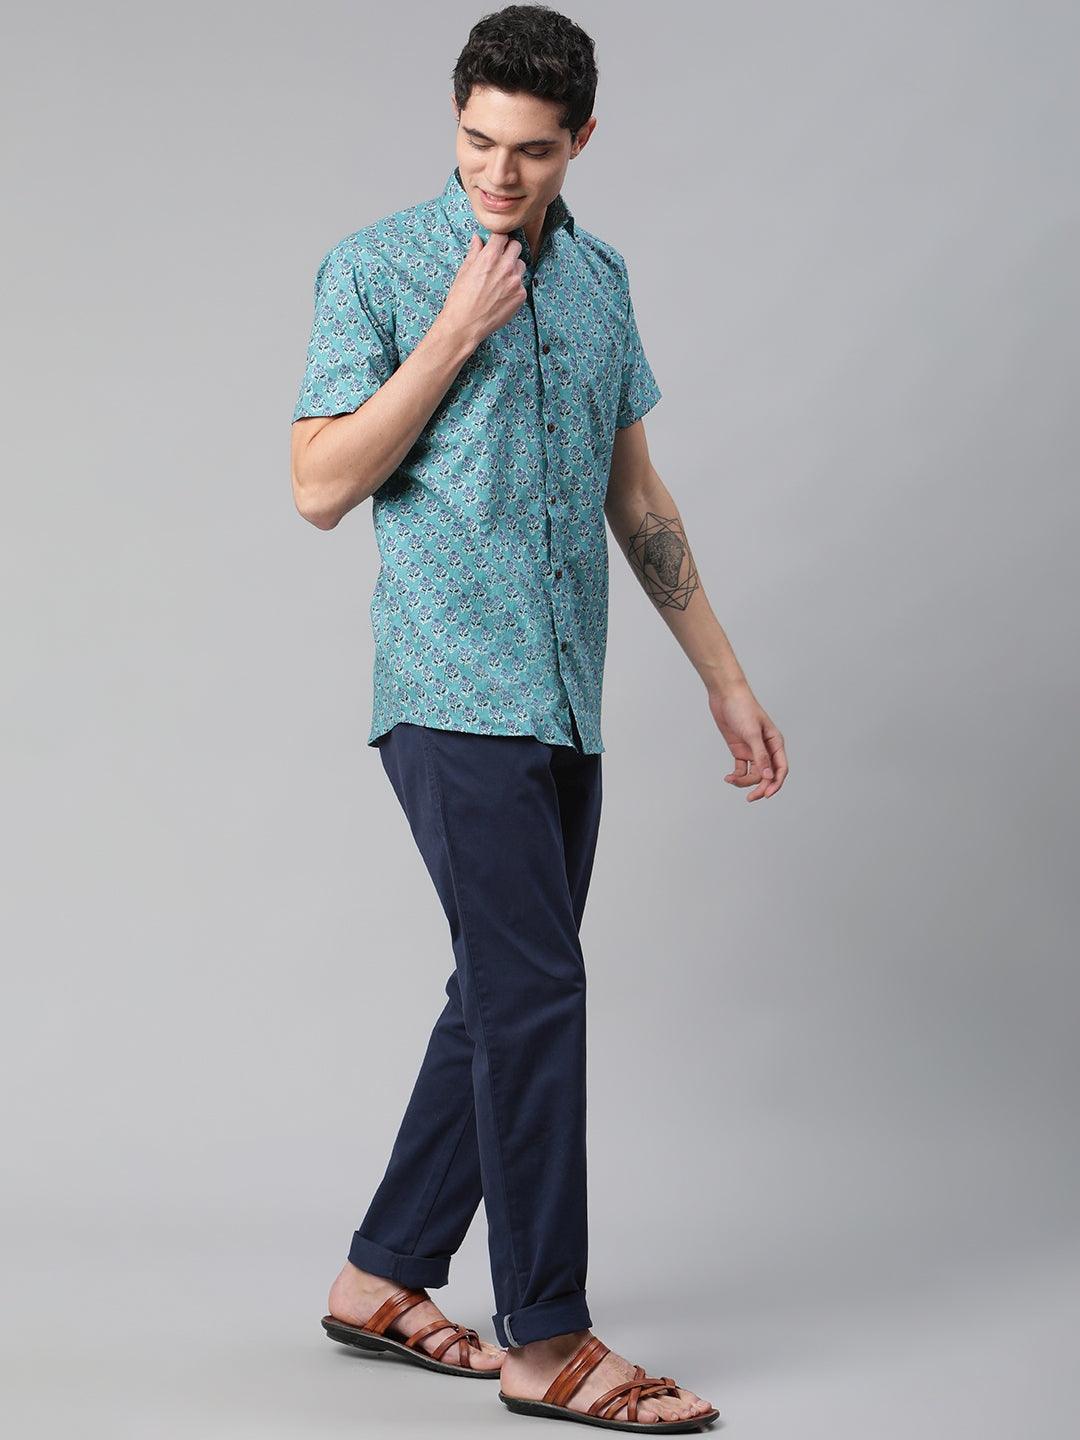 Millennial Men Turquoise blue & Blue  Cotton  Half Sleeve Shirt for Men-MMH0179 - divenaworld.com